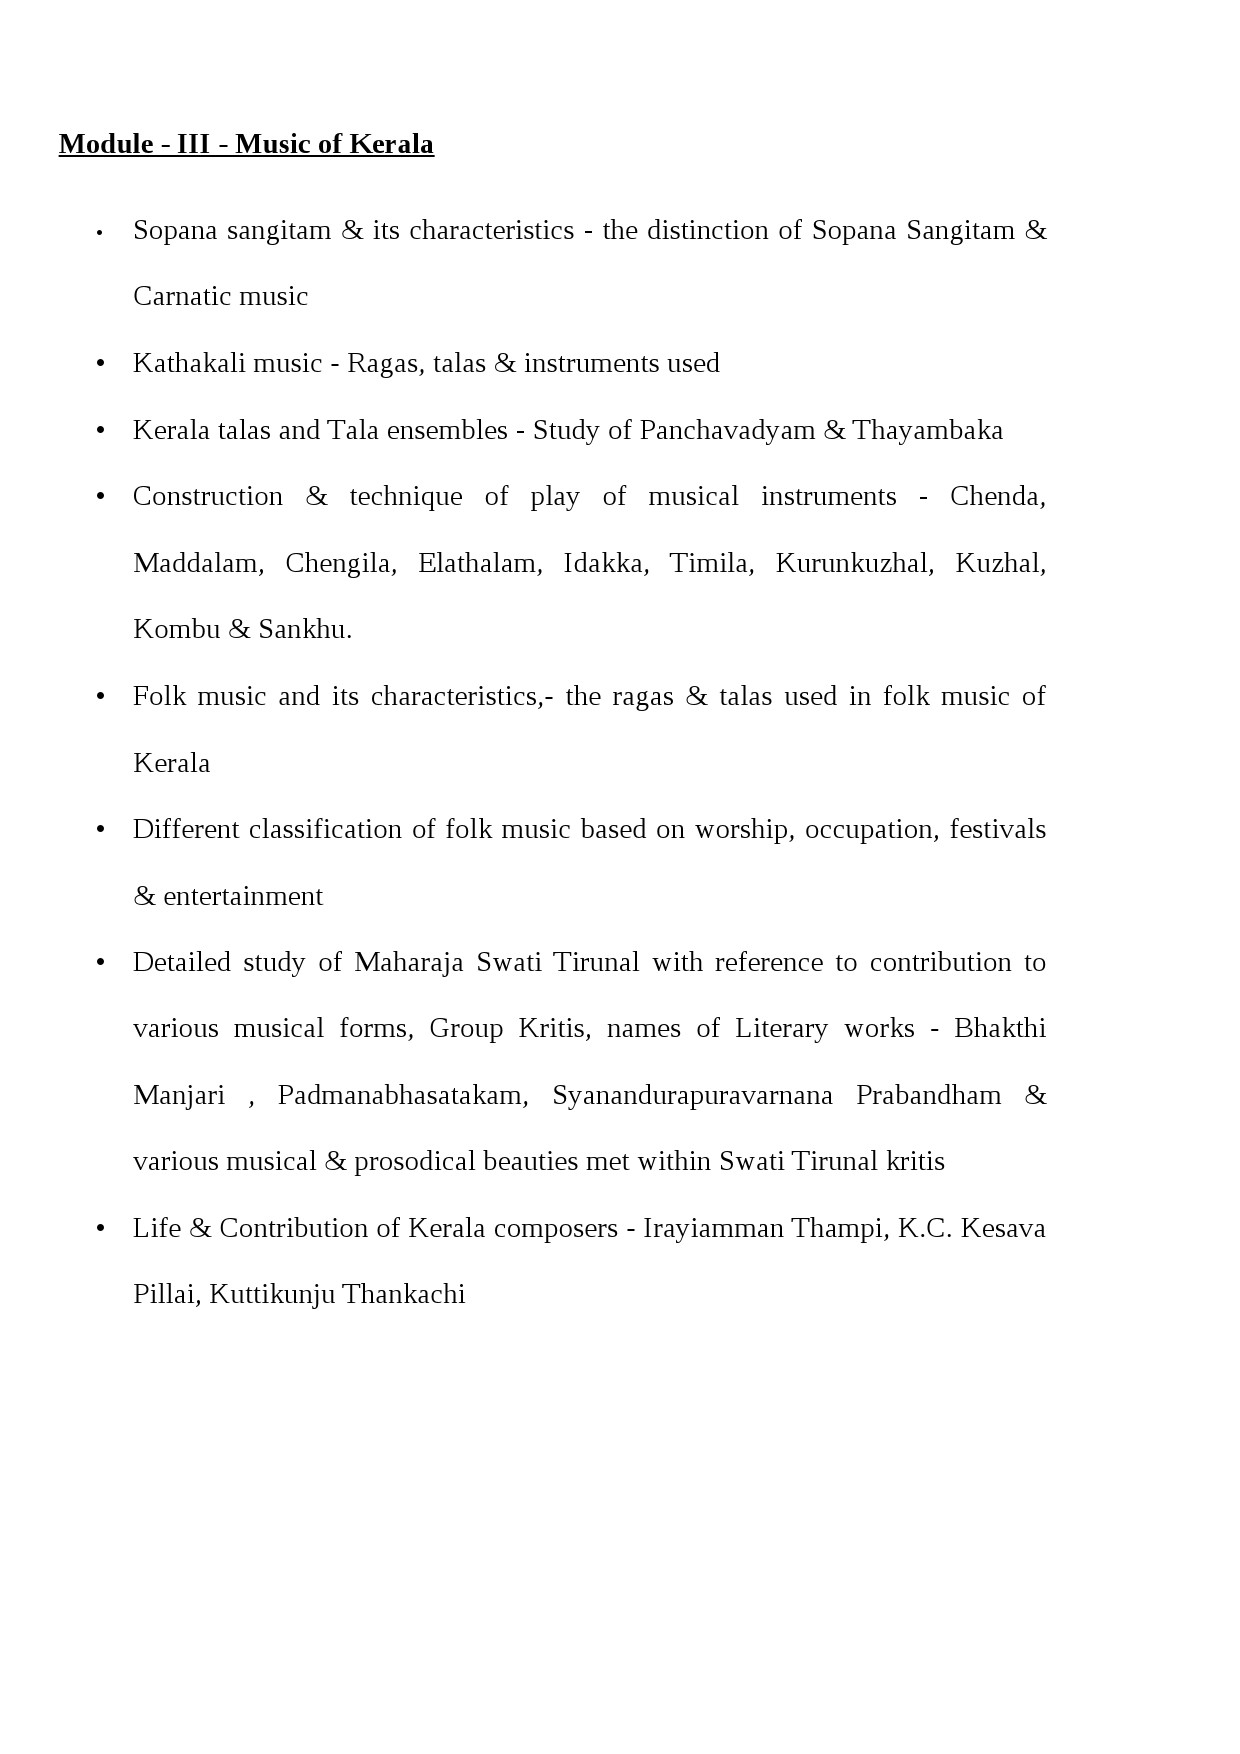 Humanities Syllabus for Kerala PSC 2021 Exam - Notification Image 15